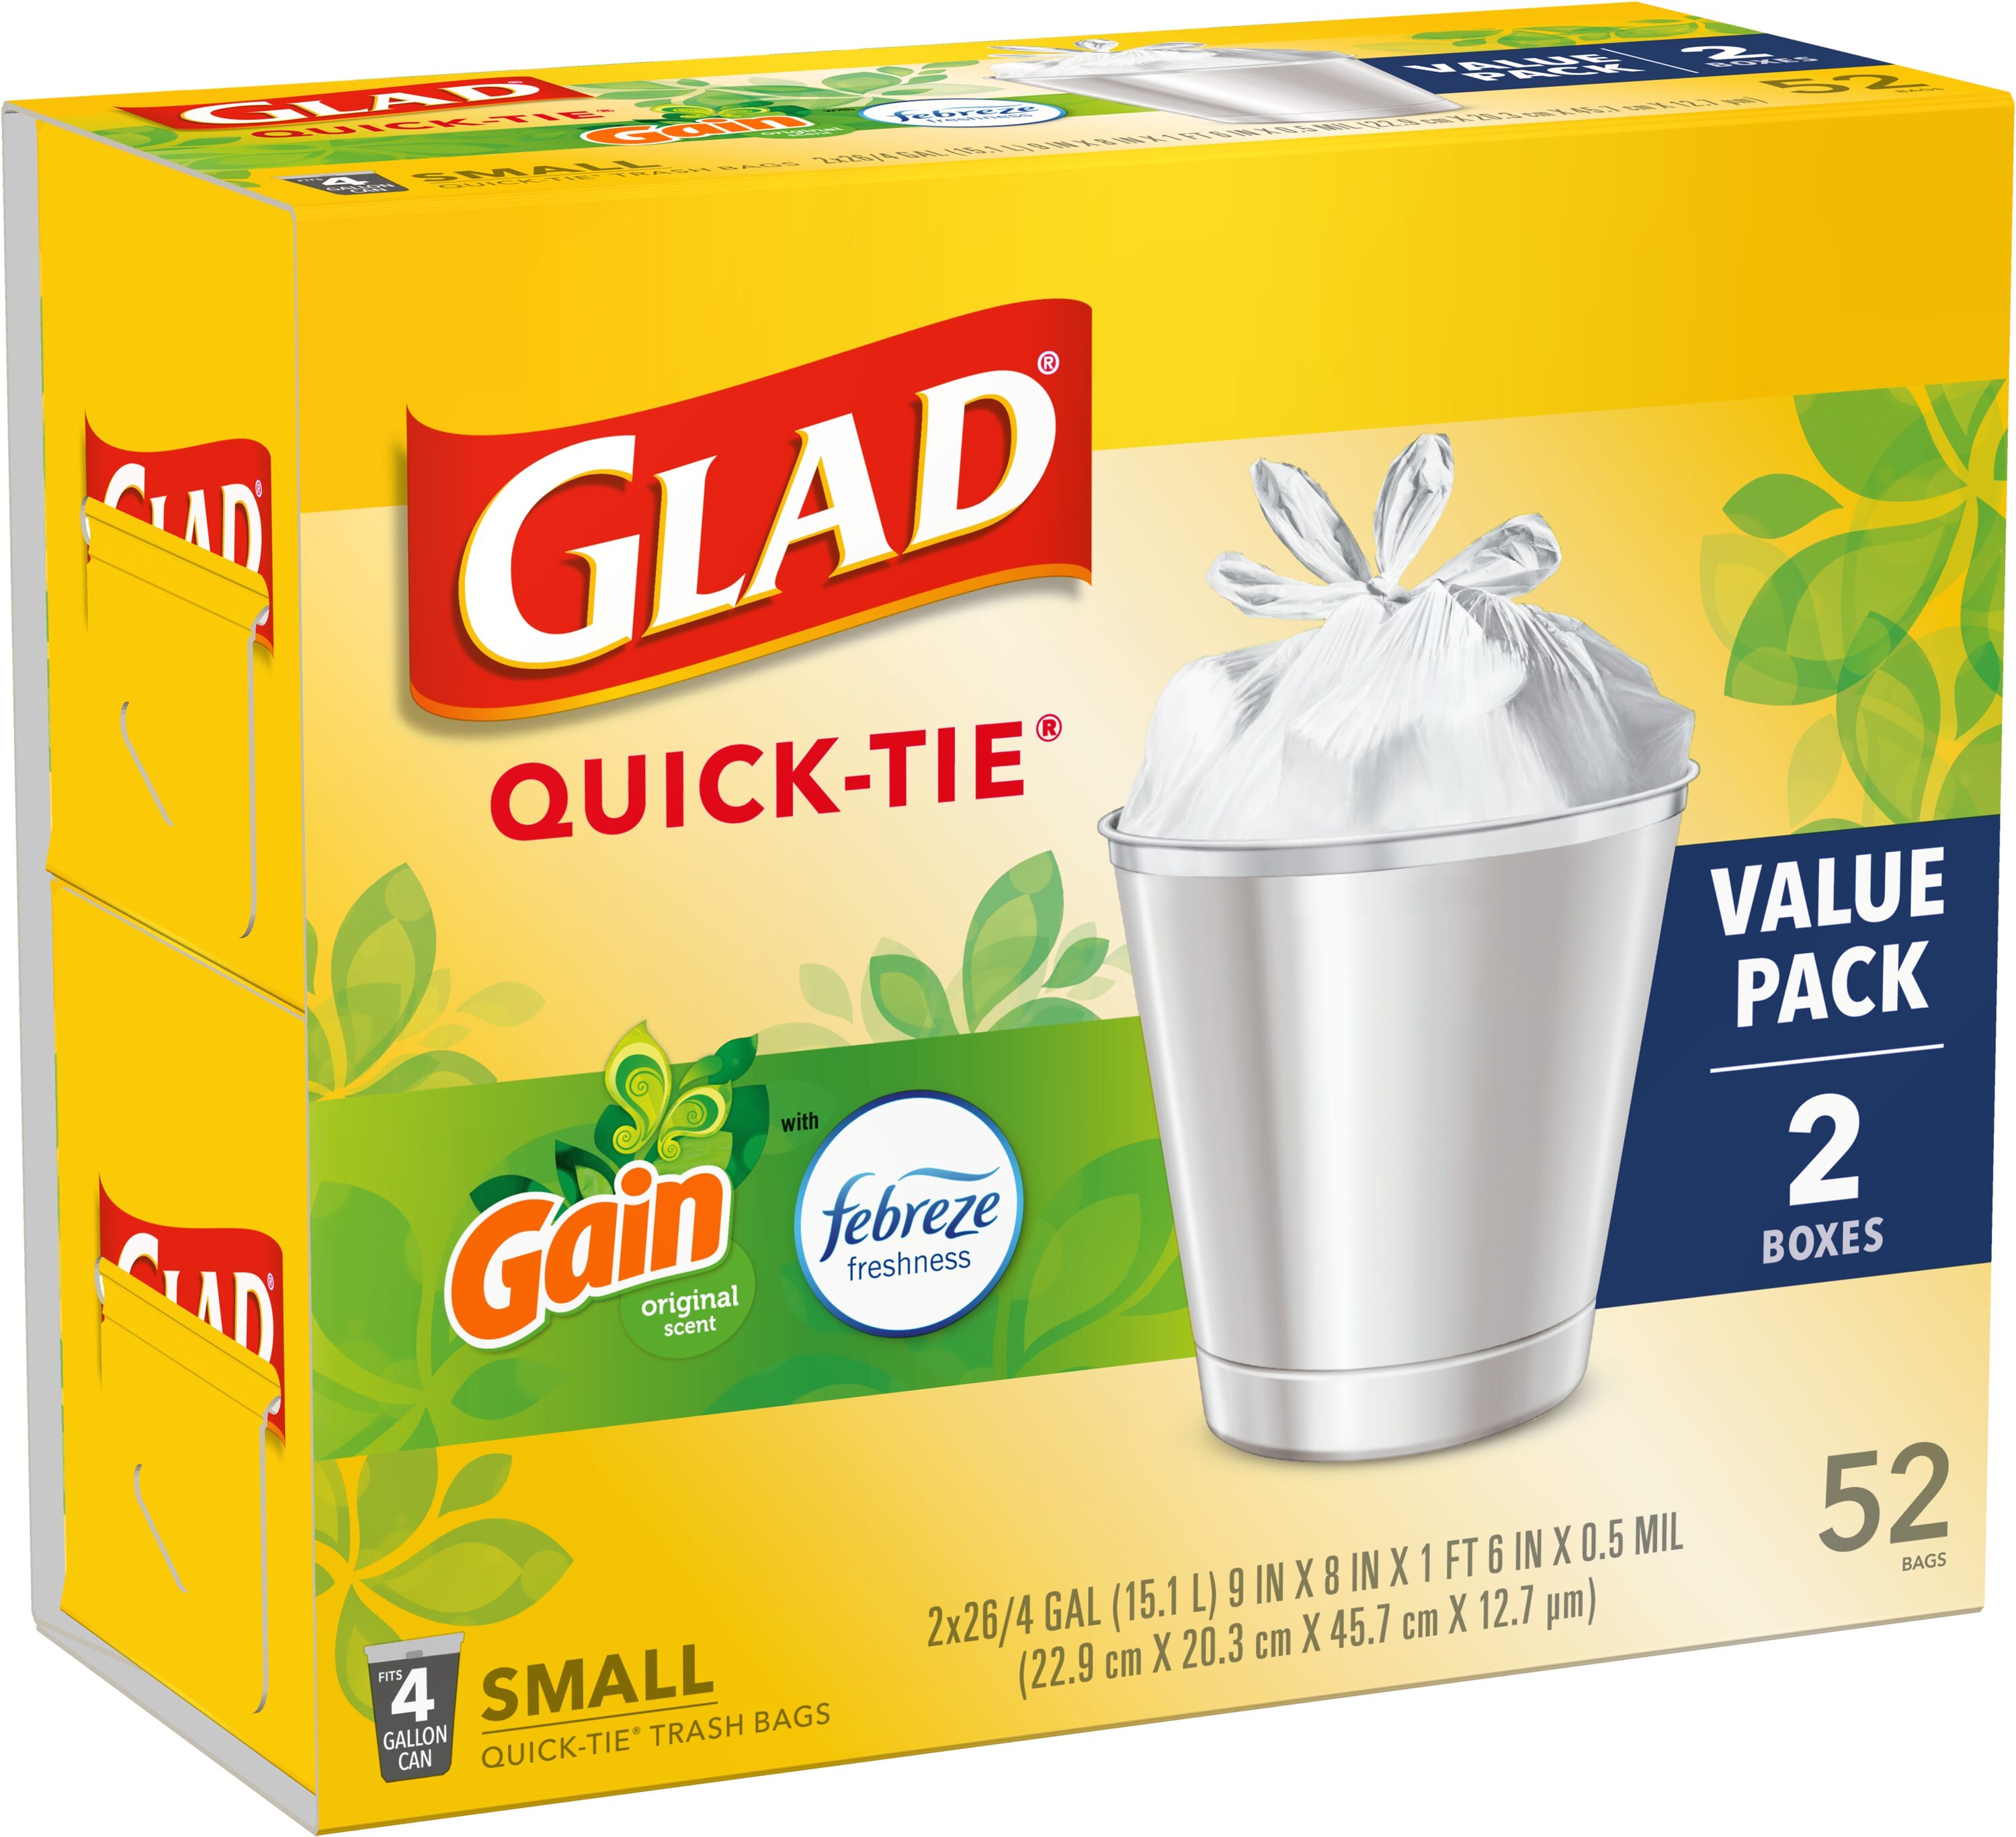 Glad 4-Gallons Gain Original White Plastic Wastebasket Flap Tie